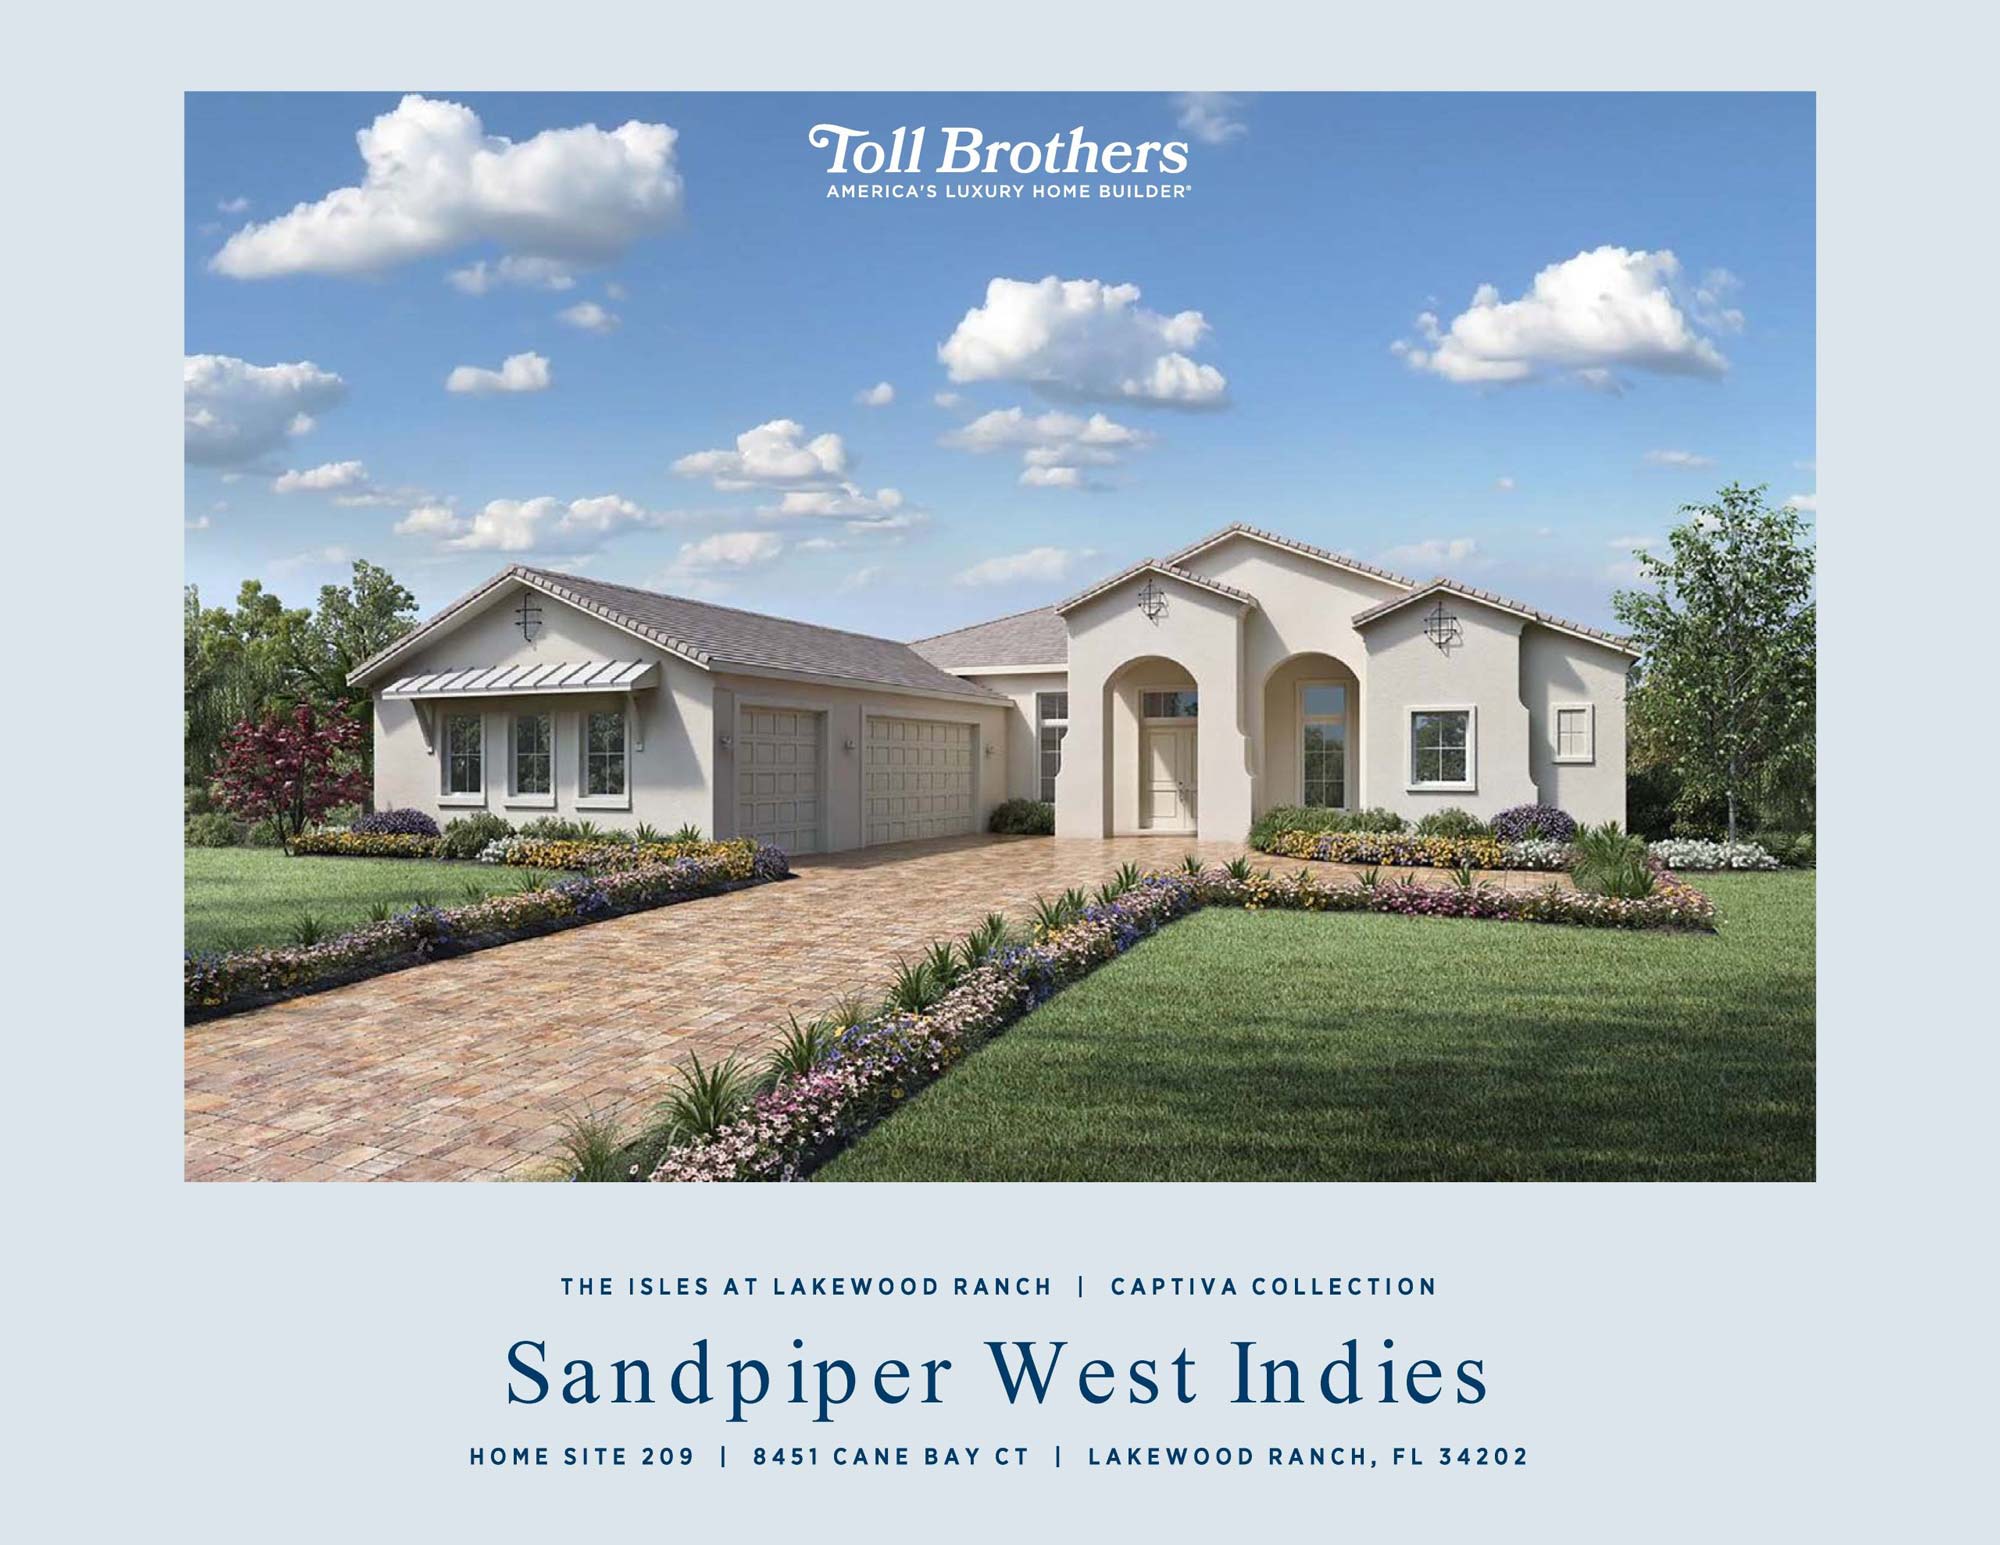 Sandpiper West Indies Home Site 209